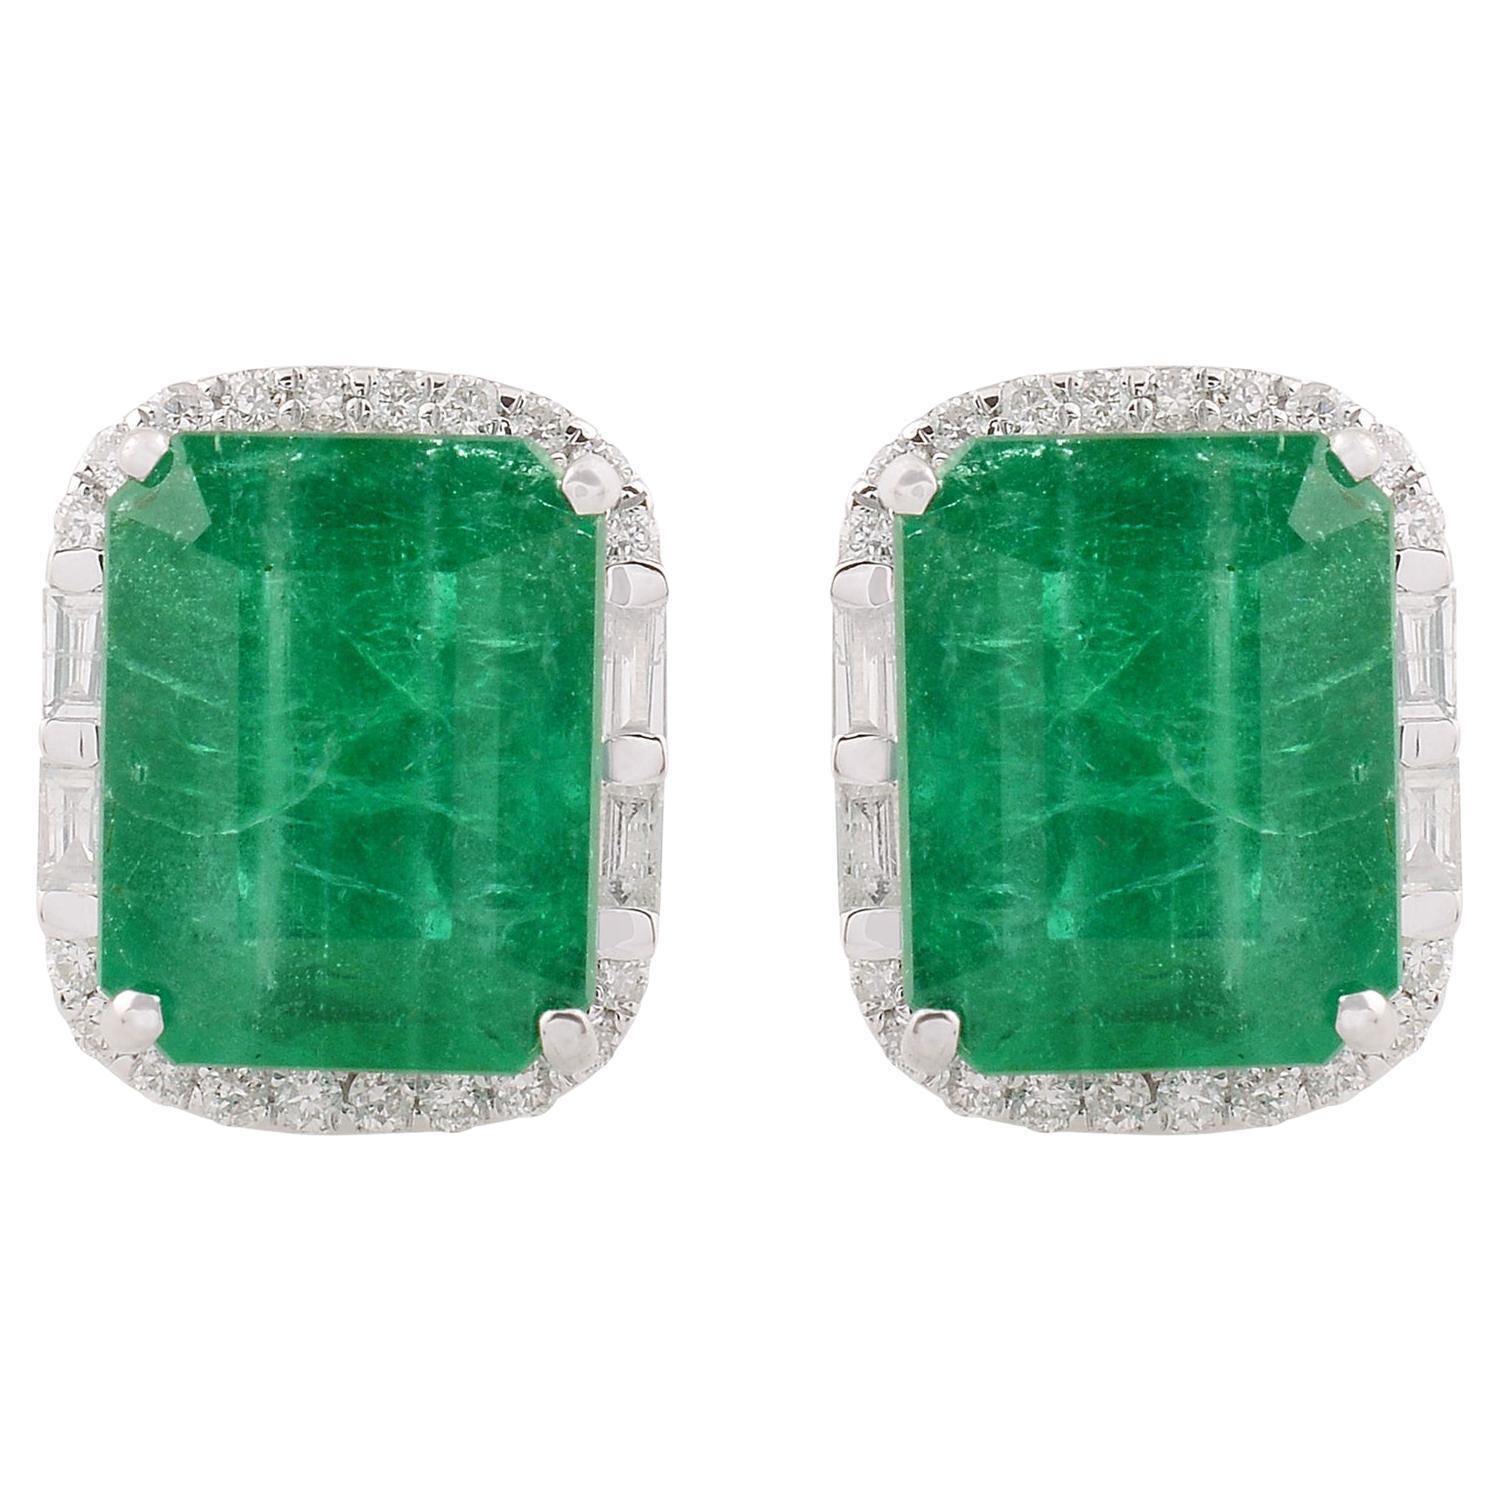 Zambian Emerald Stud Earrings SI Clarity HI Color Diamond 18k White Gold Jewelry